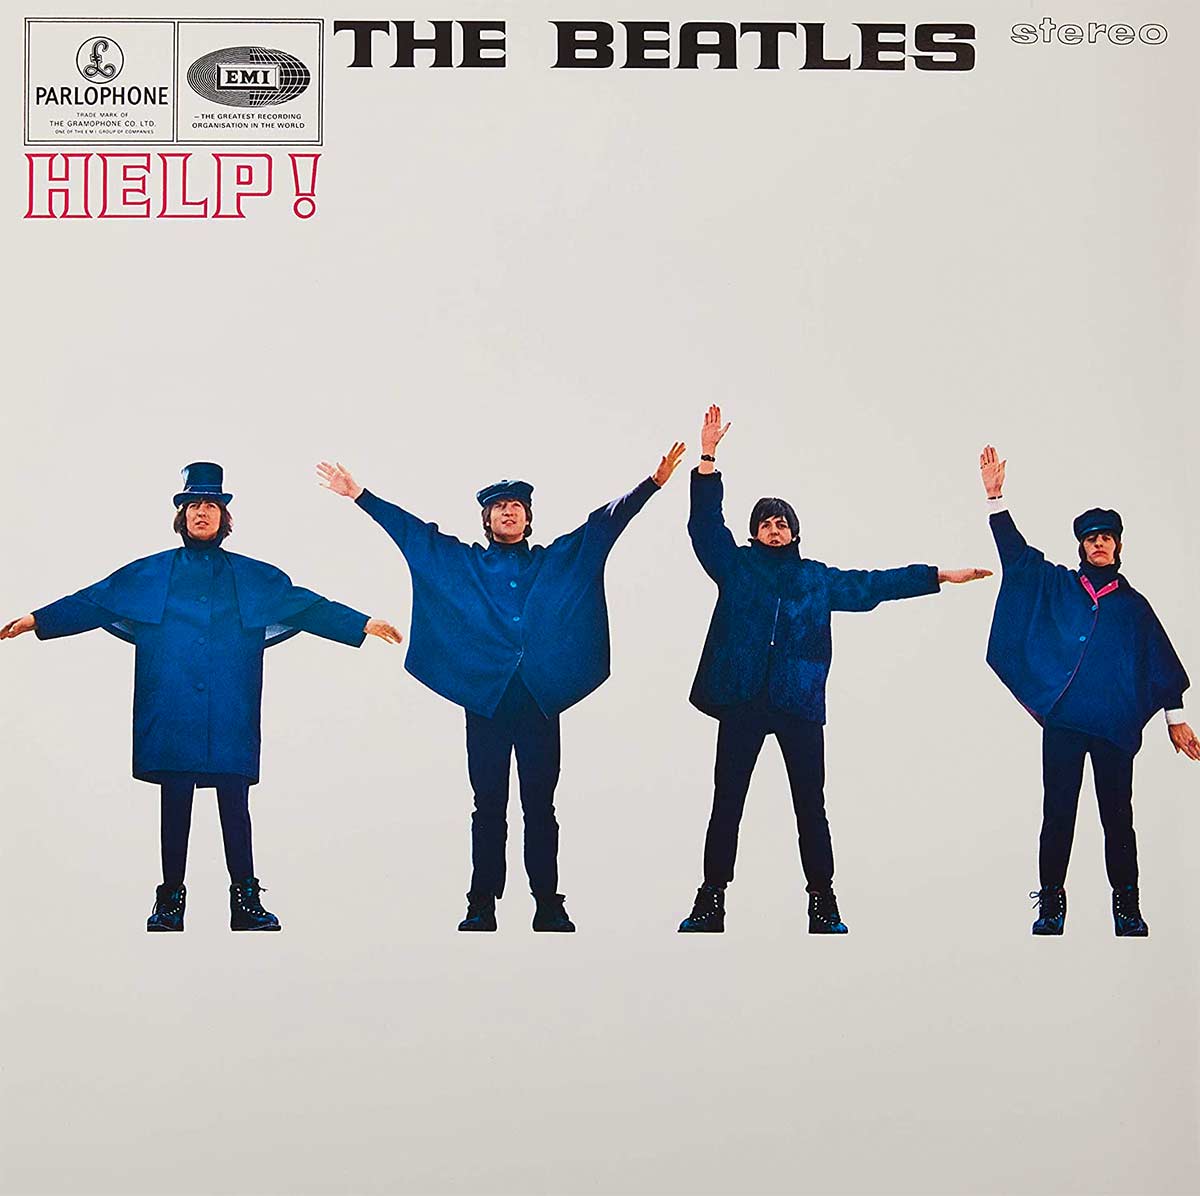 The Beatles - Help! (180 Gram Vinyl, Remastered, Reissue) - Vinyl